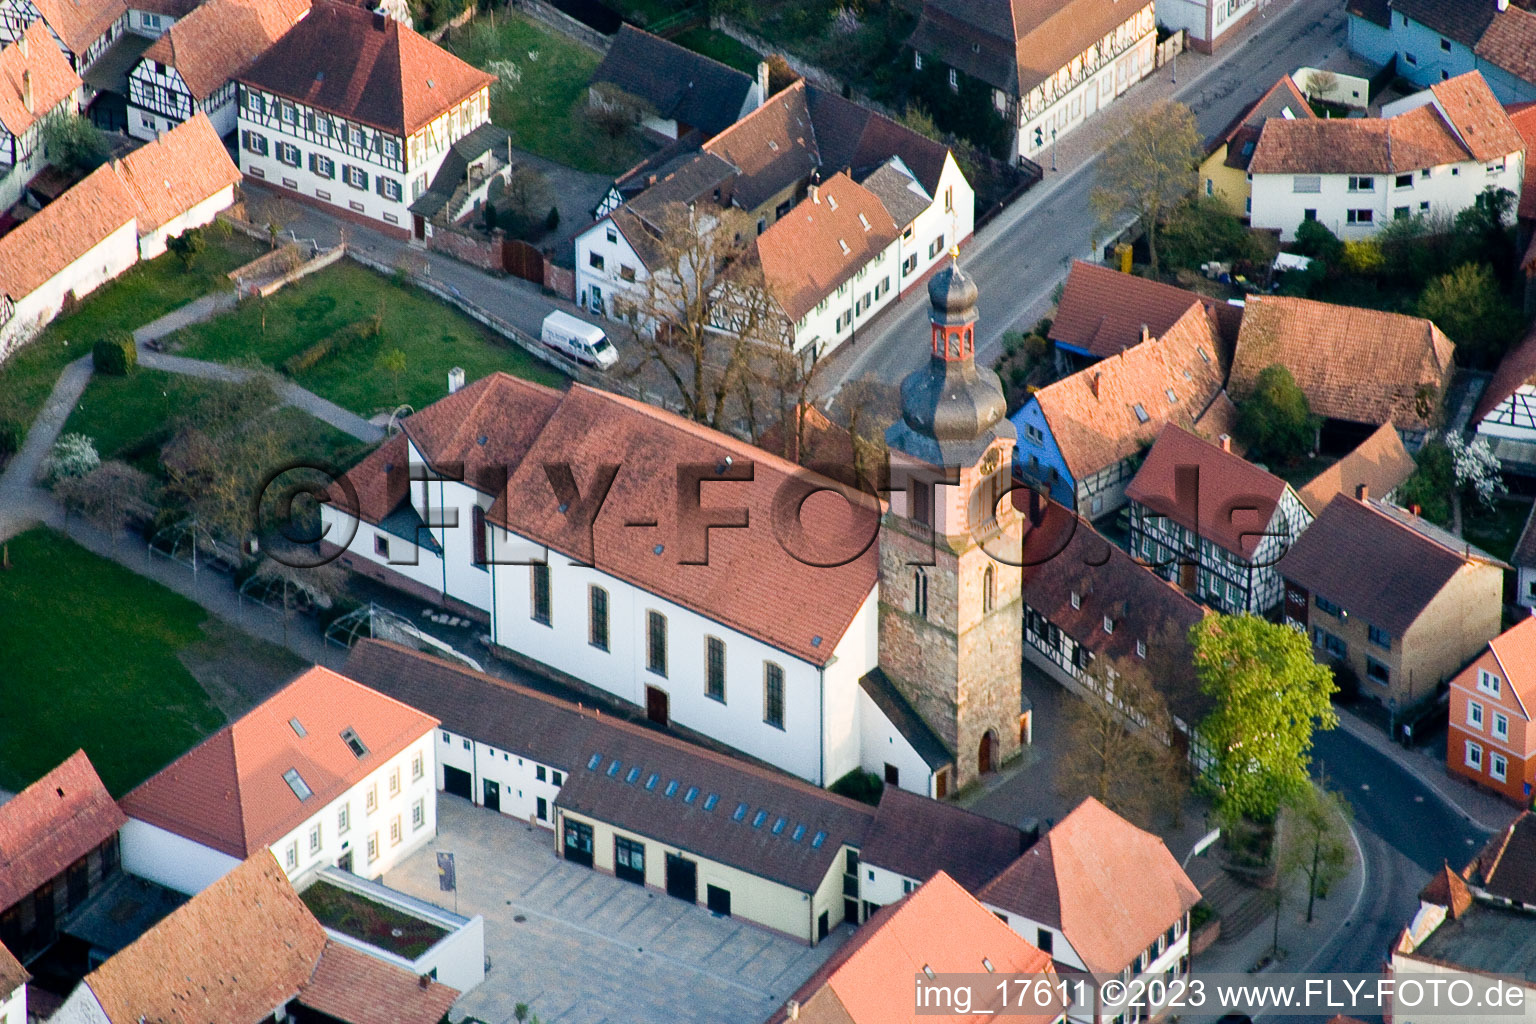 Aerial view of Church in Rheinzabern in the state Rhineland-Palatinate, Germany